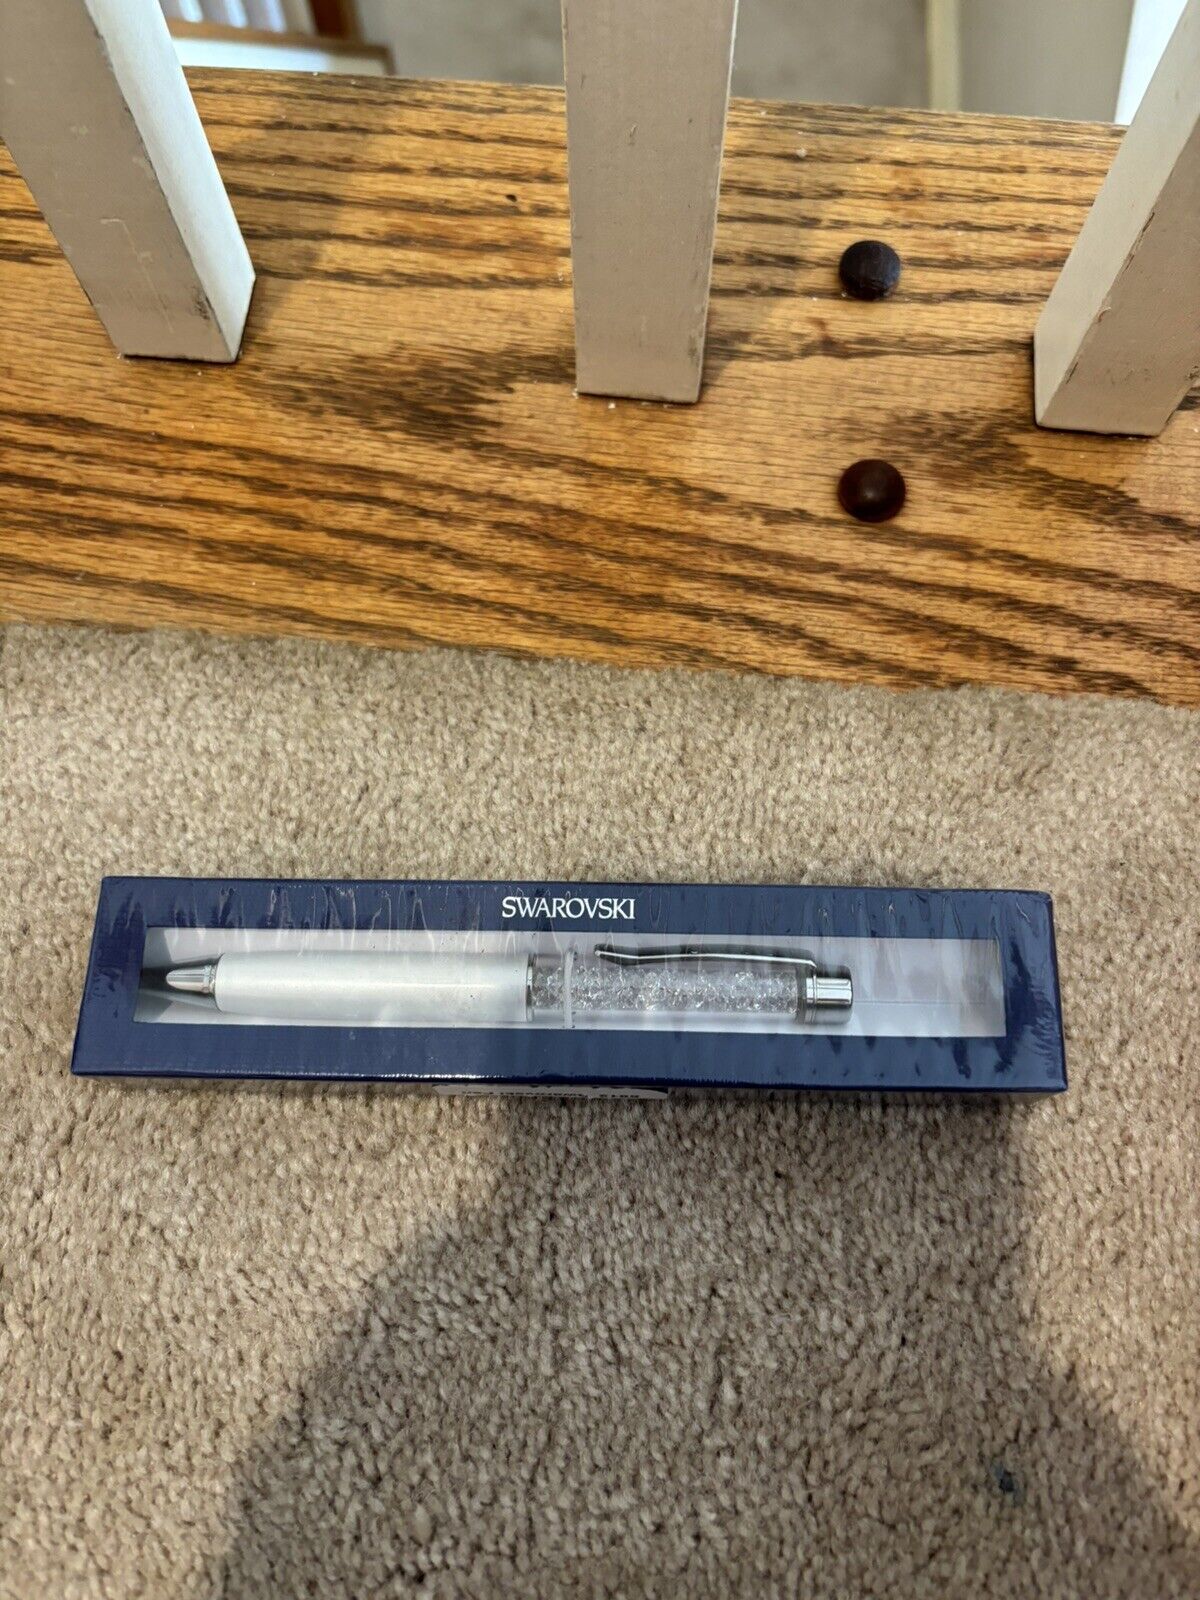 Swarovski Crystalline Ballpoint Pen, White Pearl (1053537) SEALED In Box.